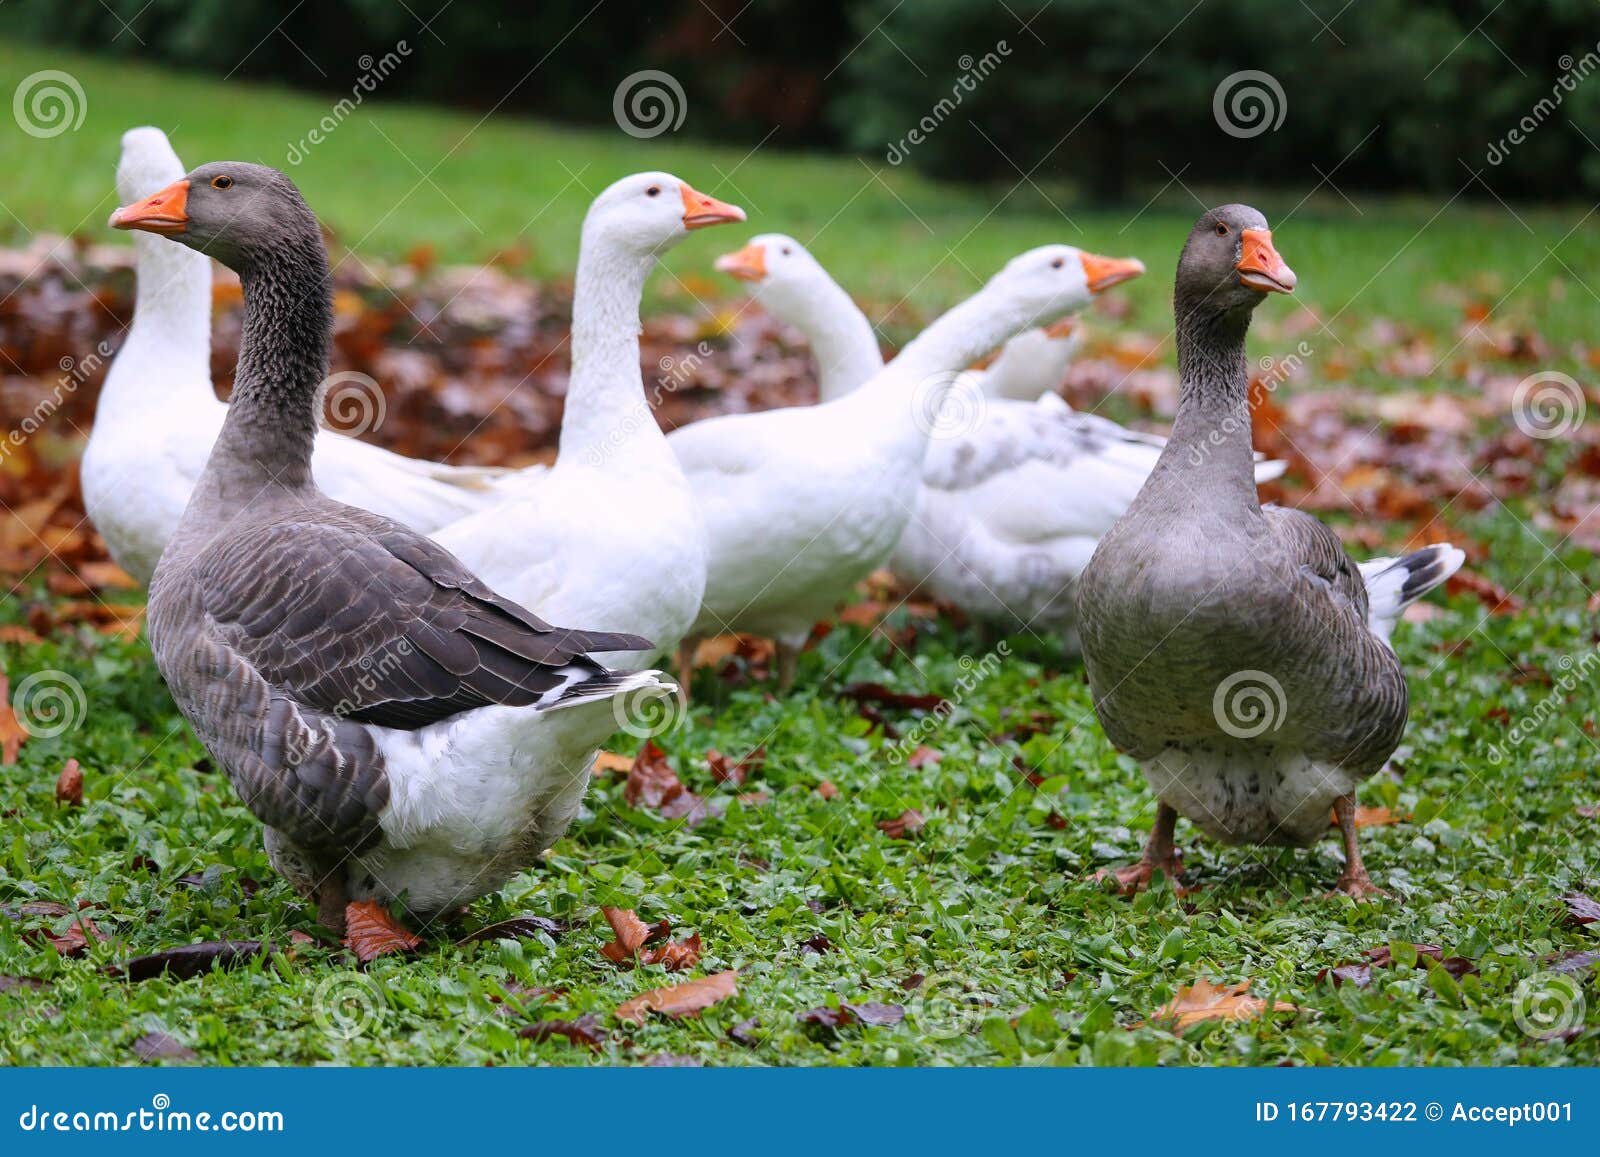 Closeup of White and Grey Adult Geese on Farm Yard. Domestic Goose Live at  Beautiful Animal Farm Stock Photo - Image of beak, beautiful: 167793422